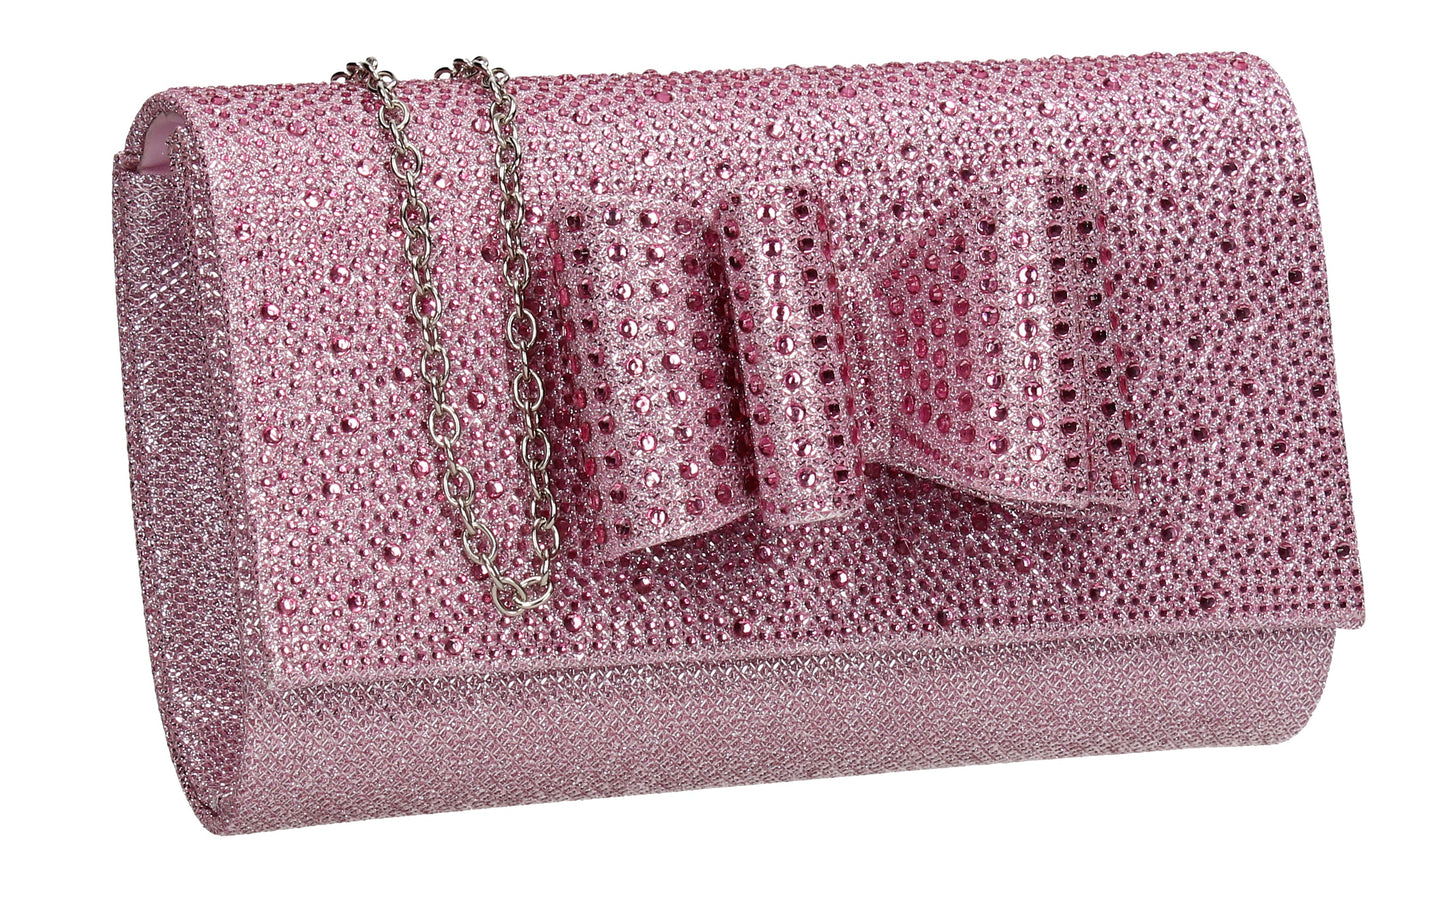 SWANKYSWANS Willa Glitter Bow Clutch Bag Pink Cute Cheap Clutch Bag For Weddings School and Work